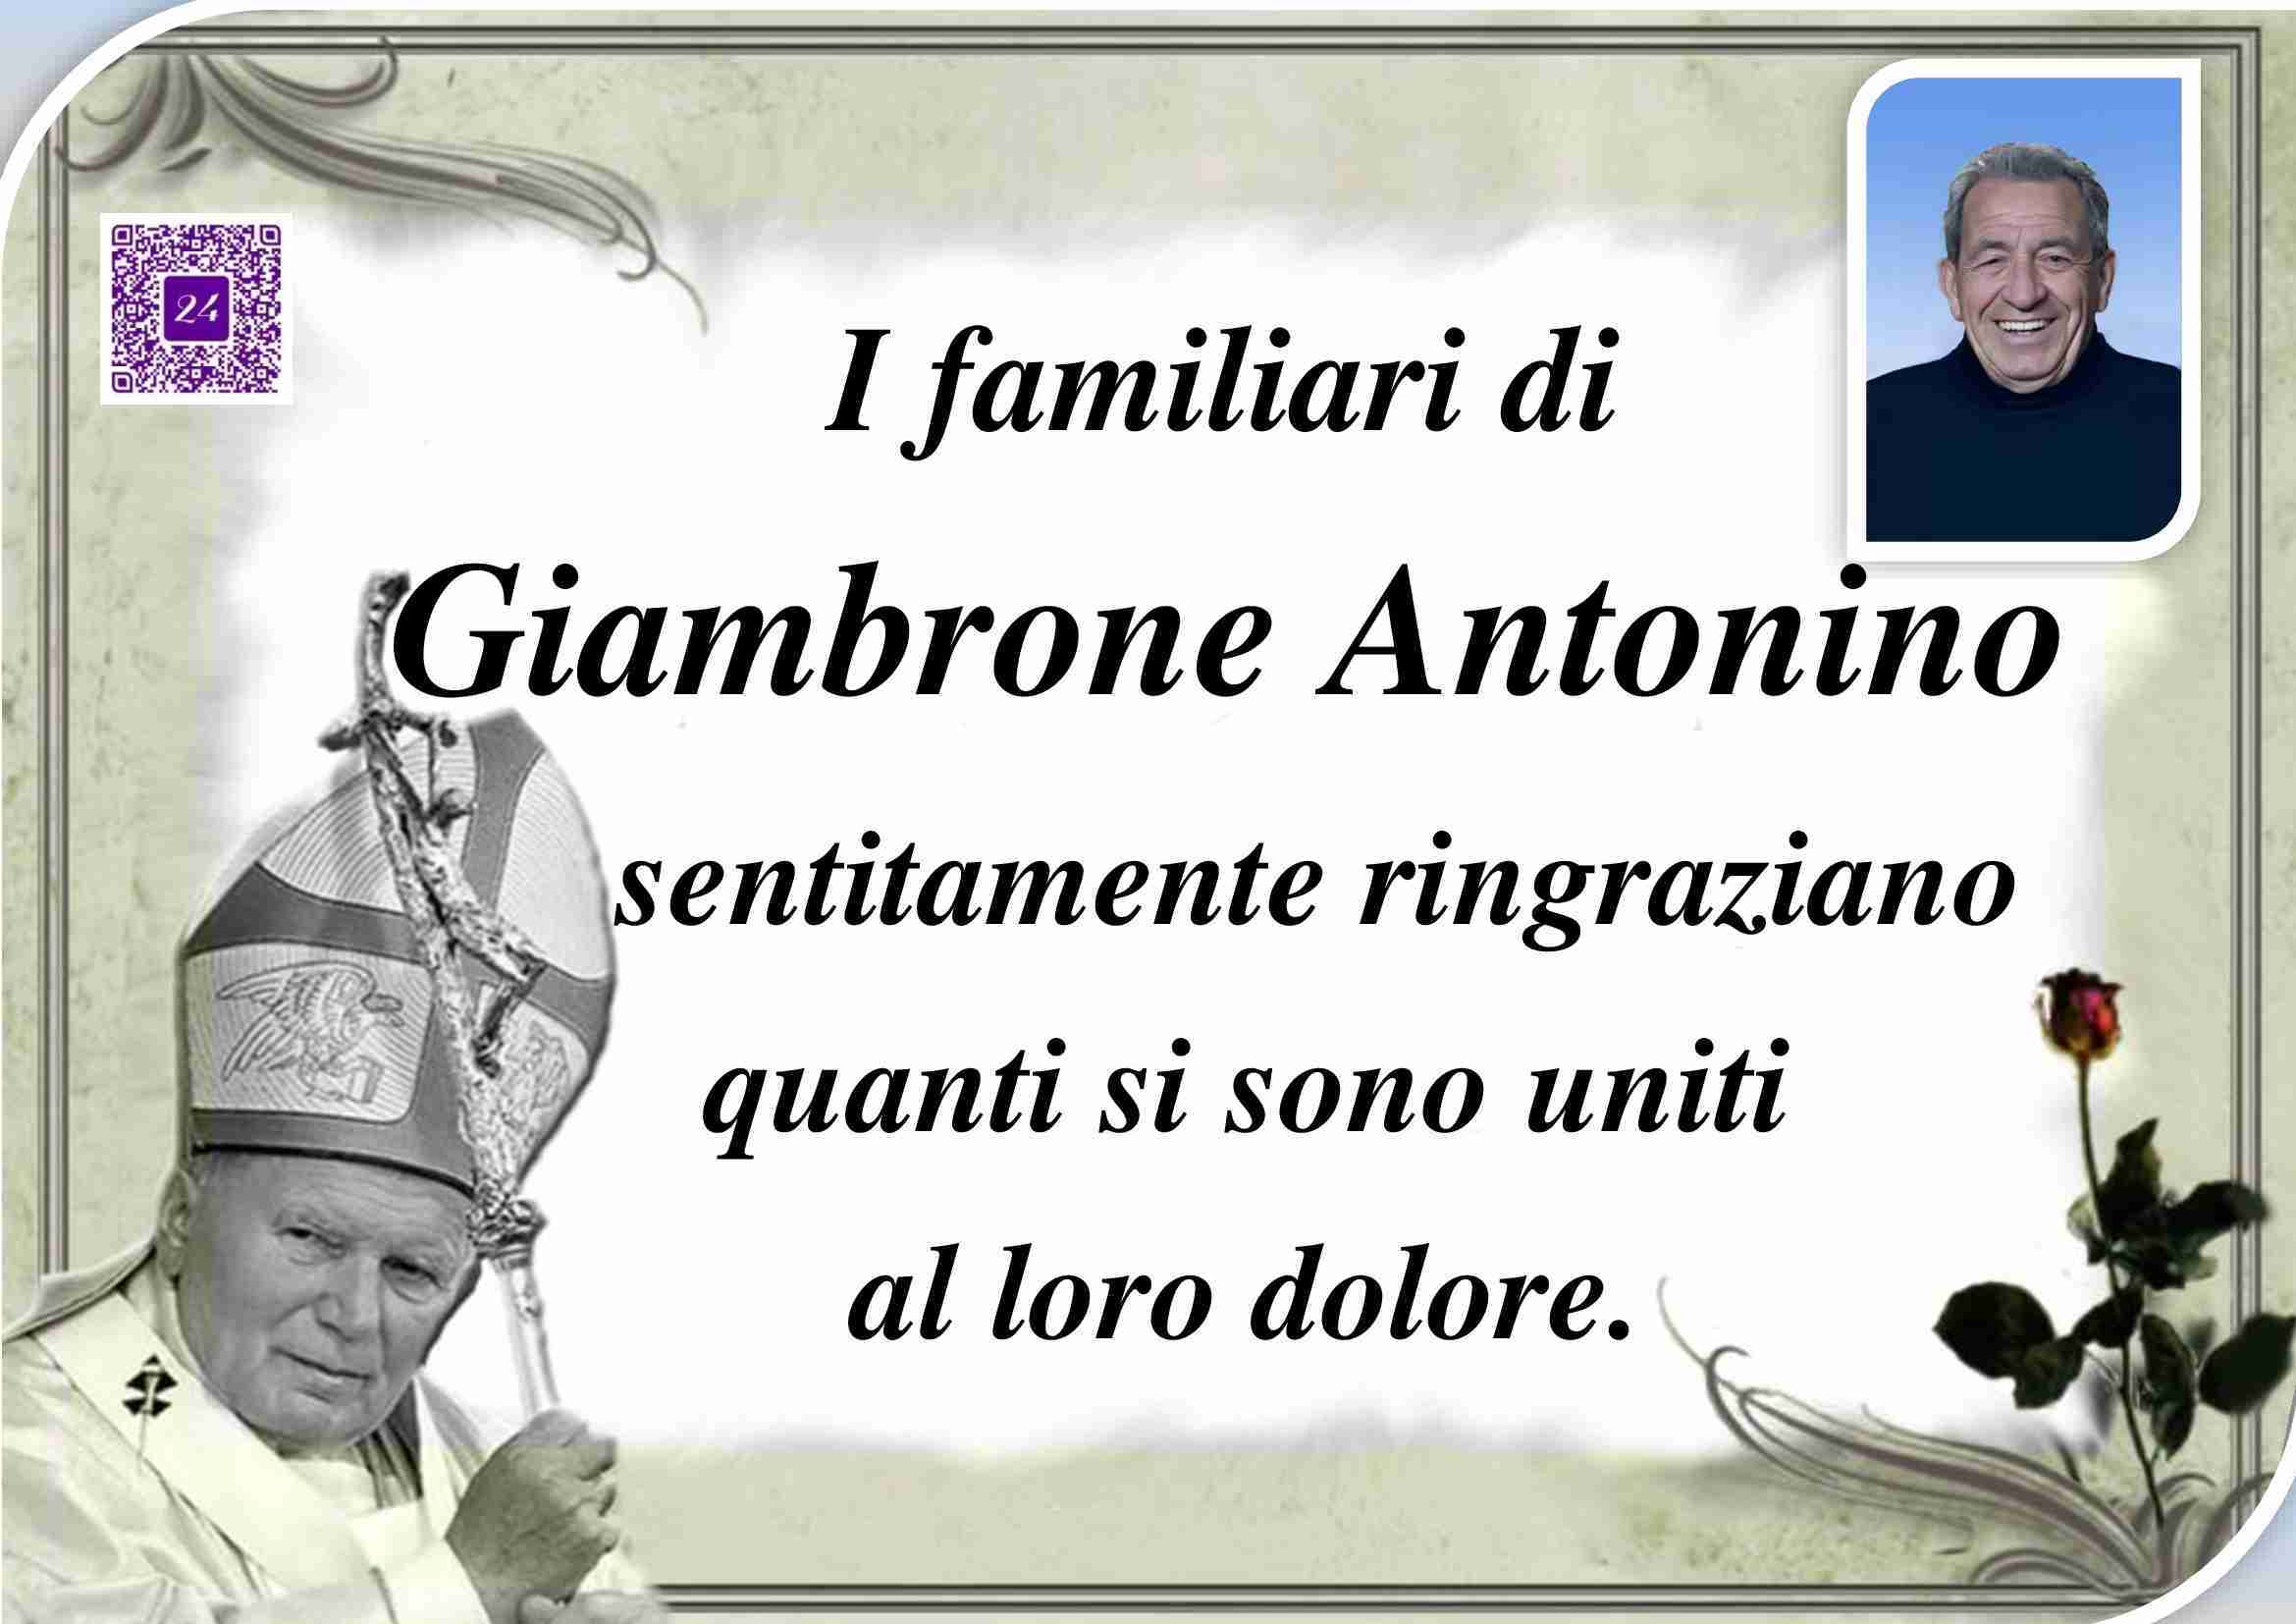 Antonino Giambrone